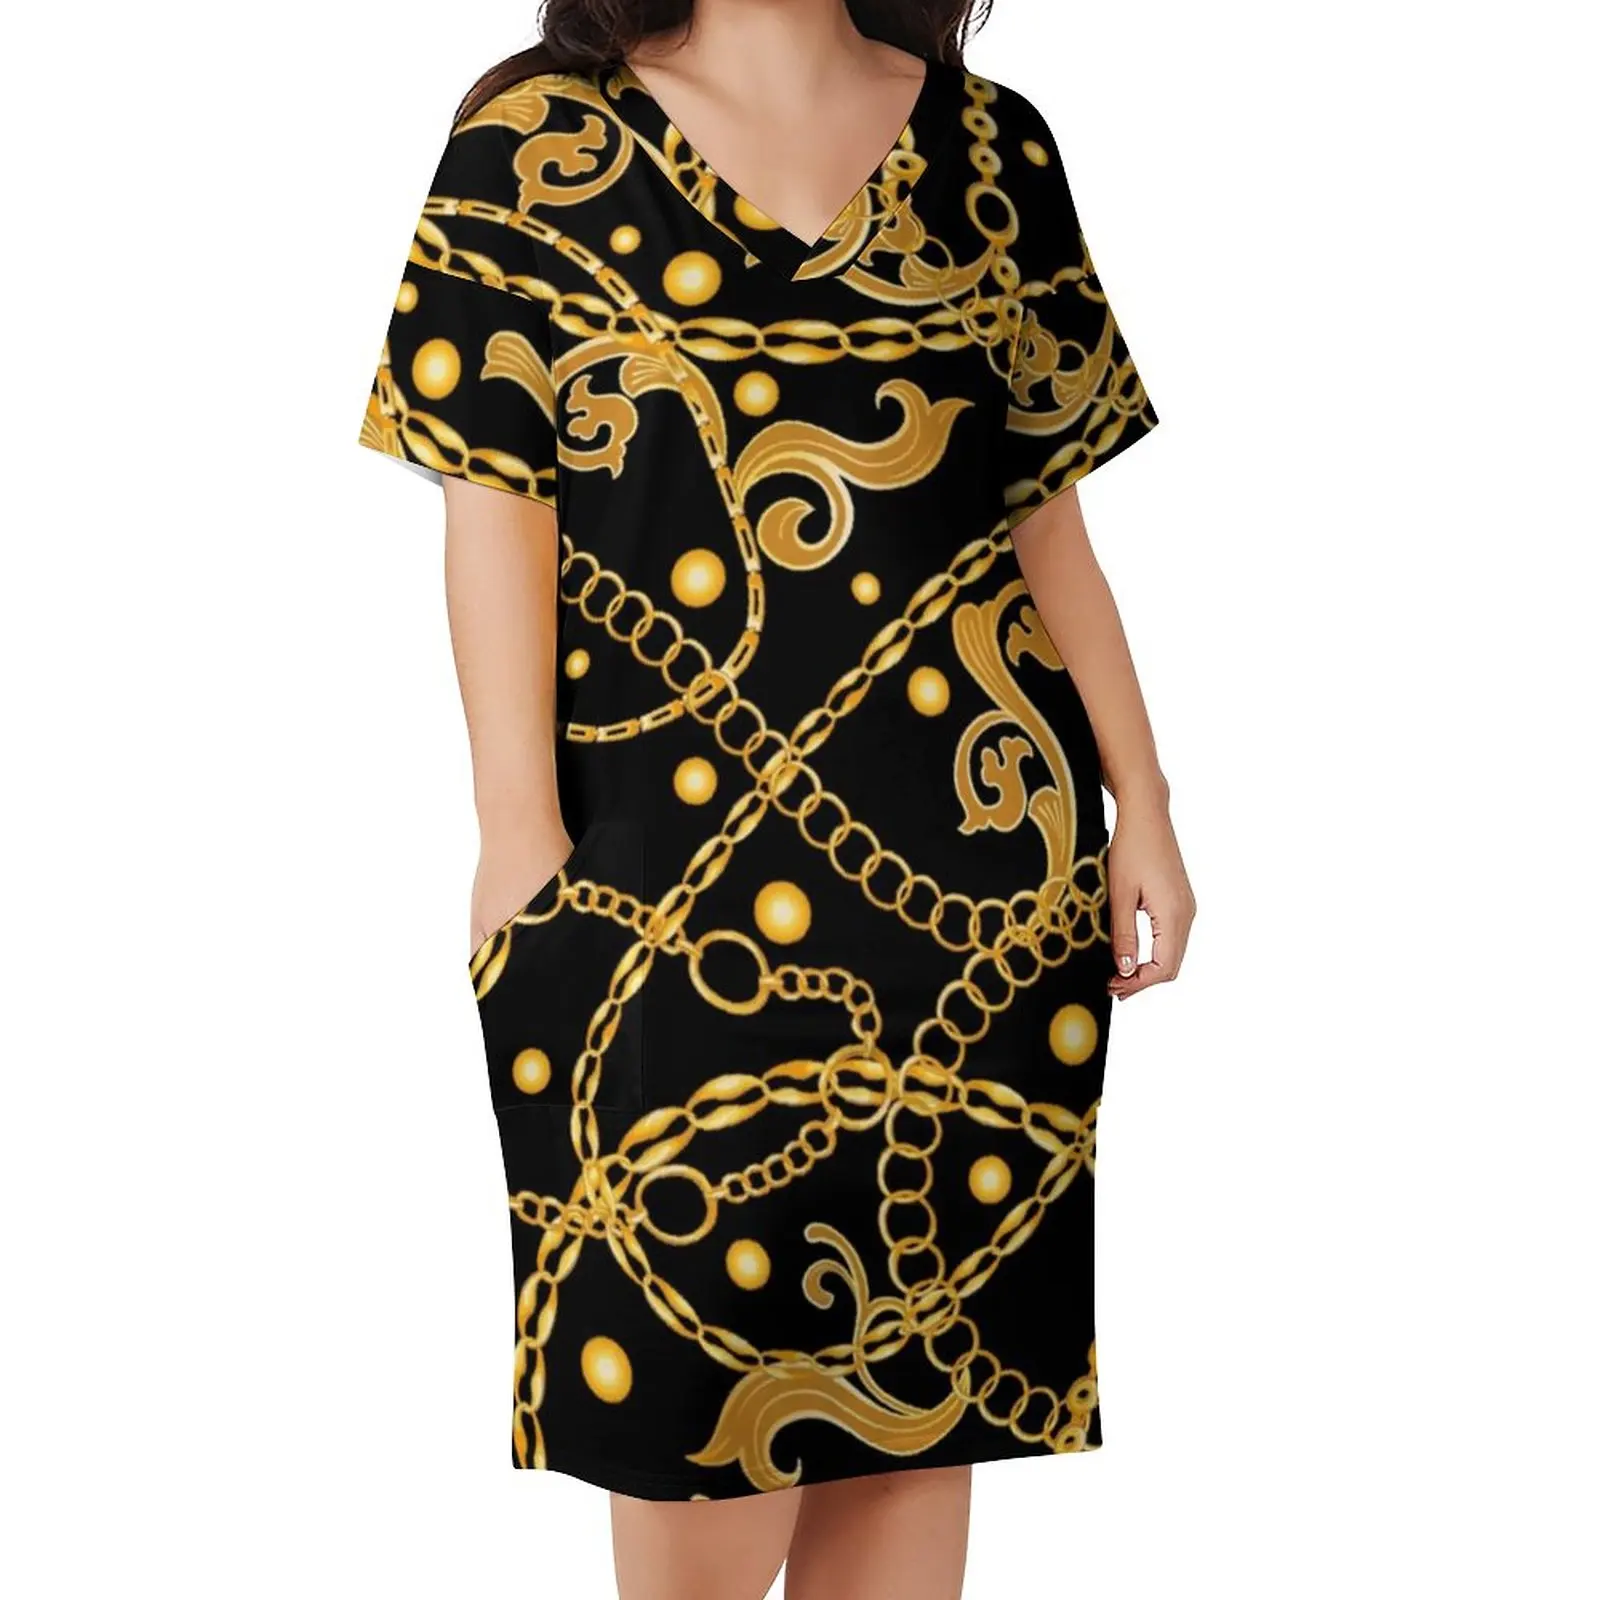 Gold Chains Casual Dress Women Retro Baroque Print Kawaii Dresses Summer V Neck Street Wear Printed Dress Plus Size 5XL